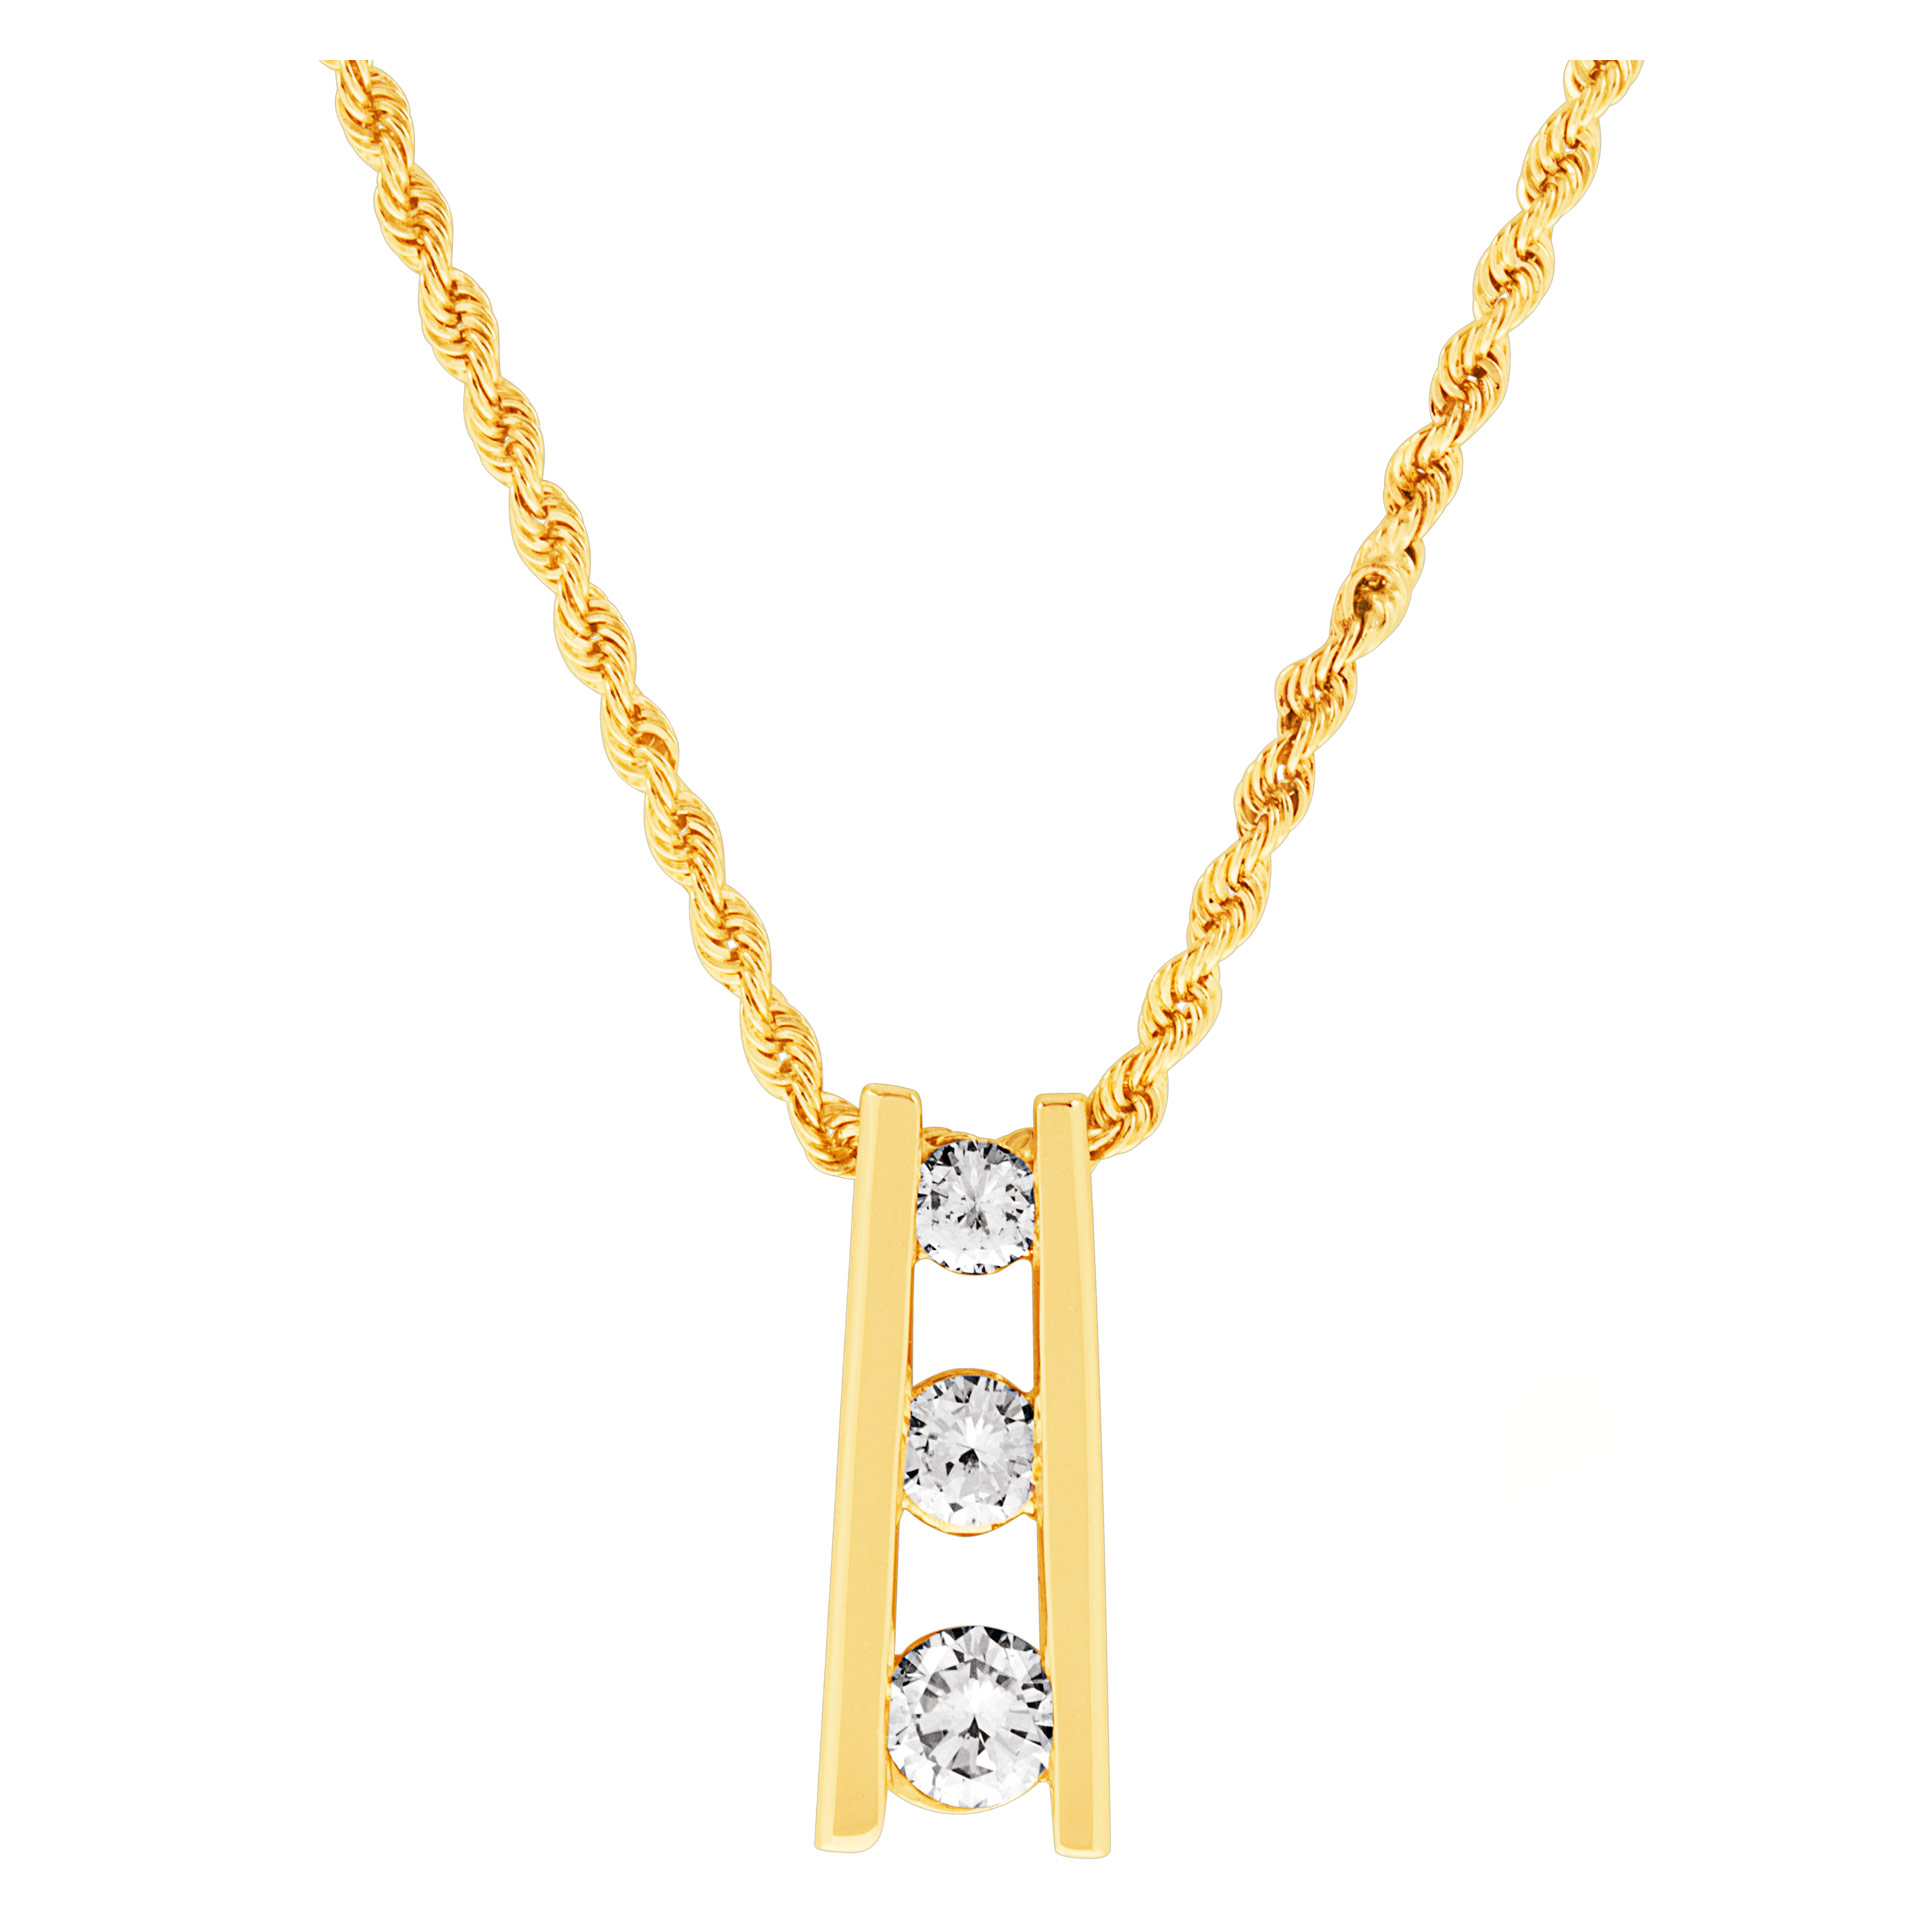 Drop diamond pendant neclace in 14k yellow gold. 0.40 carats in diamonds image 1